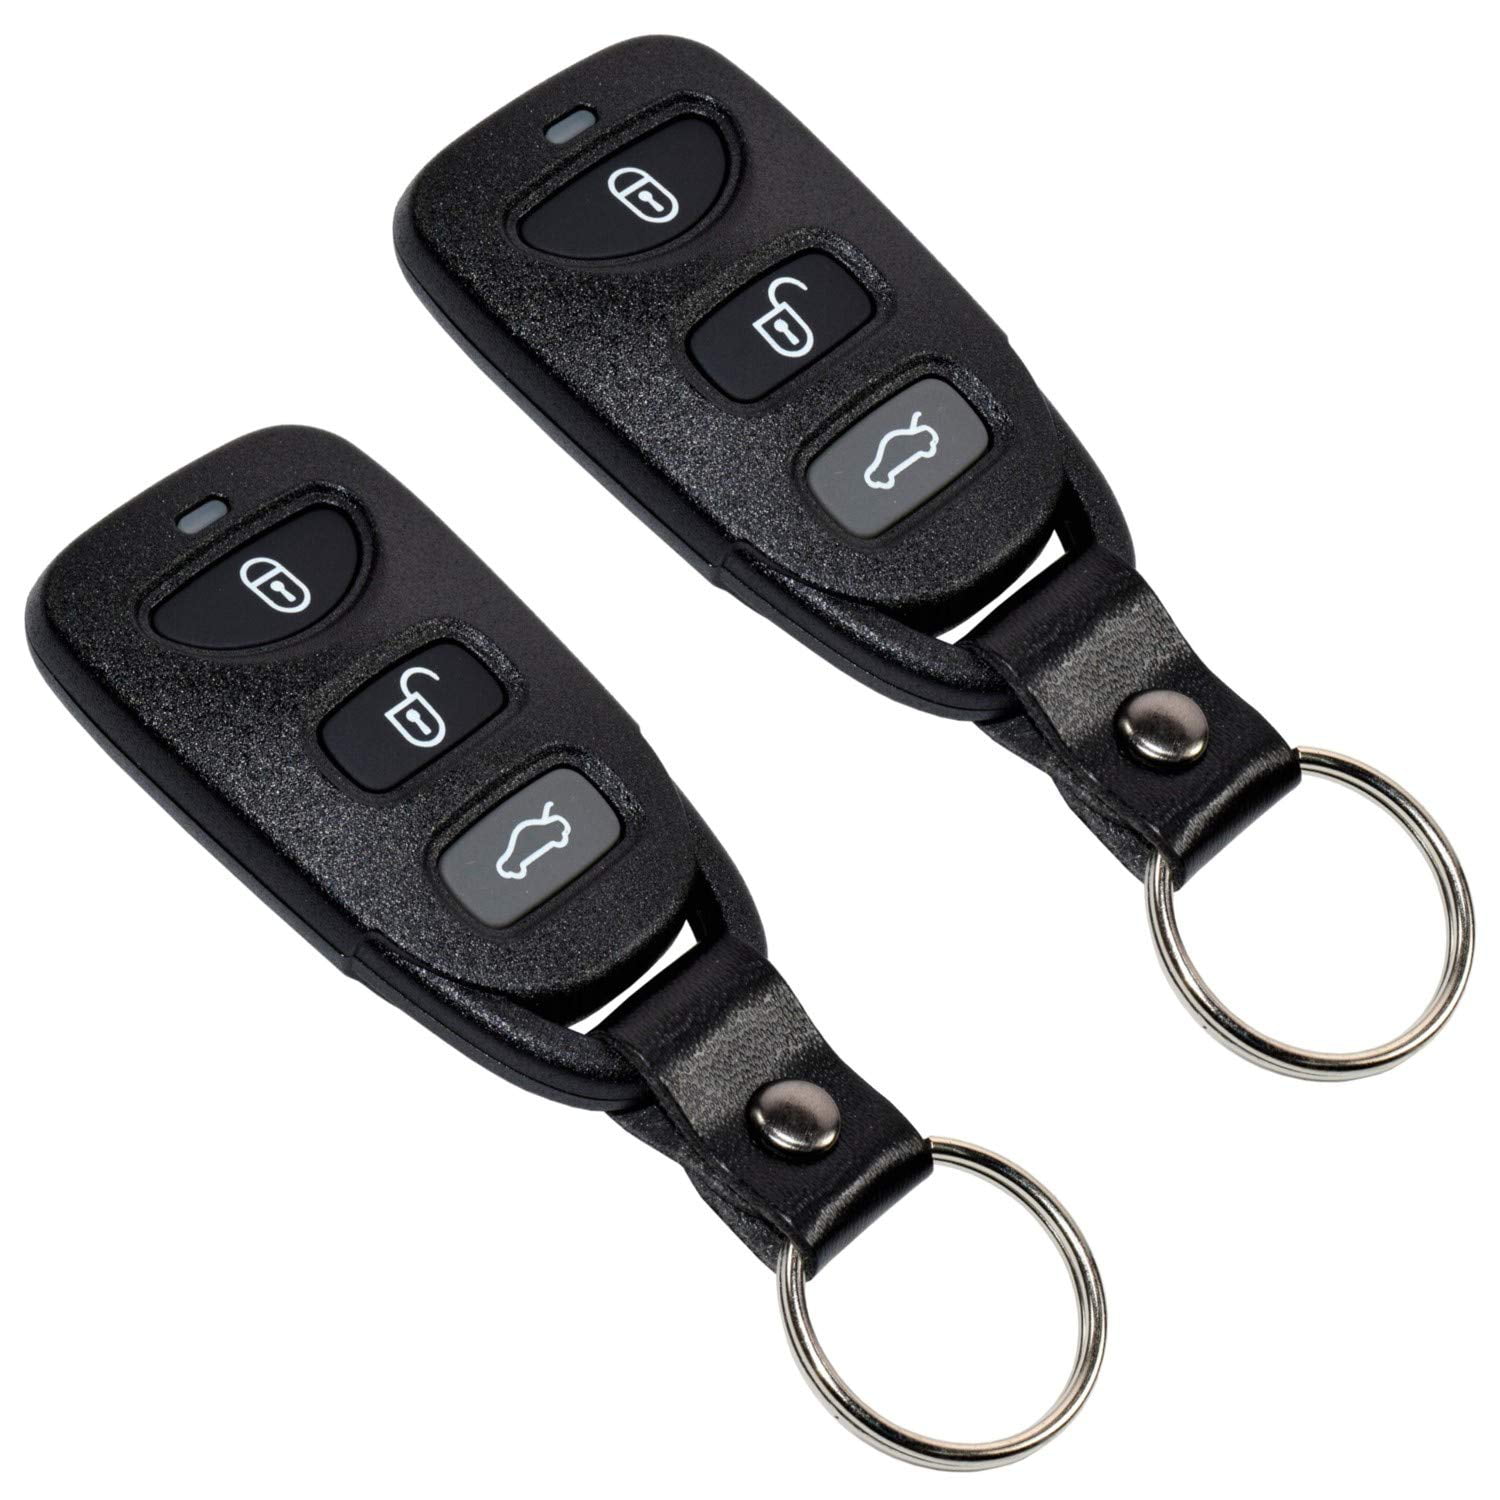 OSLOKA-310T Car Key Fob Keyless Entry Remote fits 2007-2010 Hyundai Elantra / 2006-2010 Hyundai Sonata Set of 2 